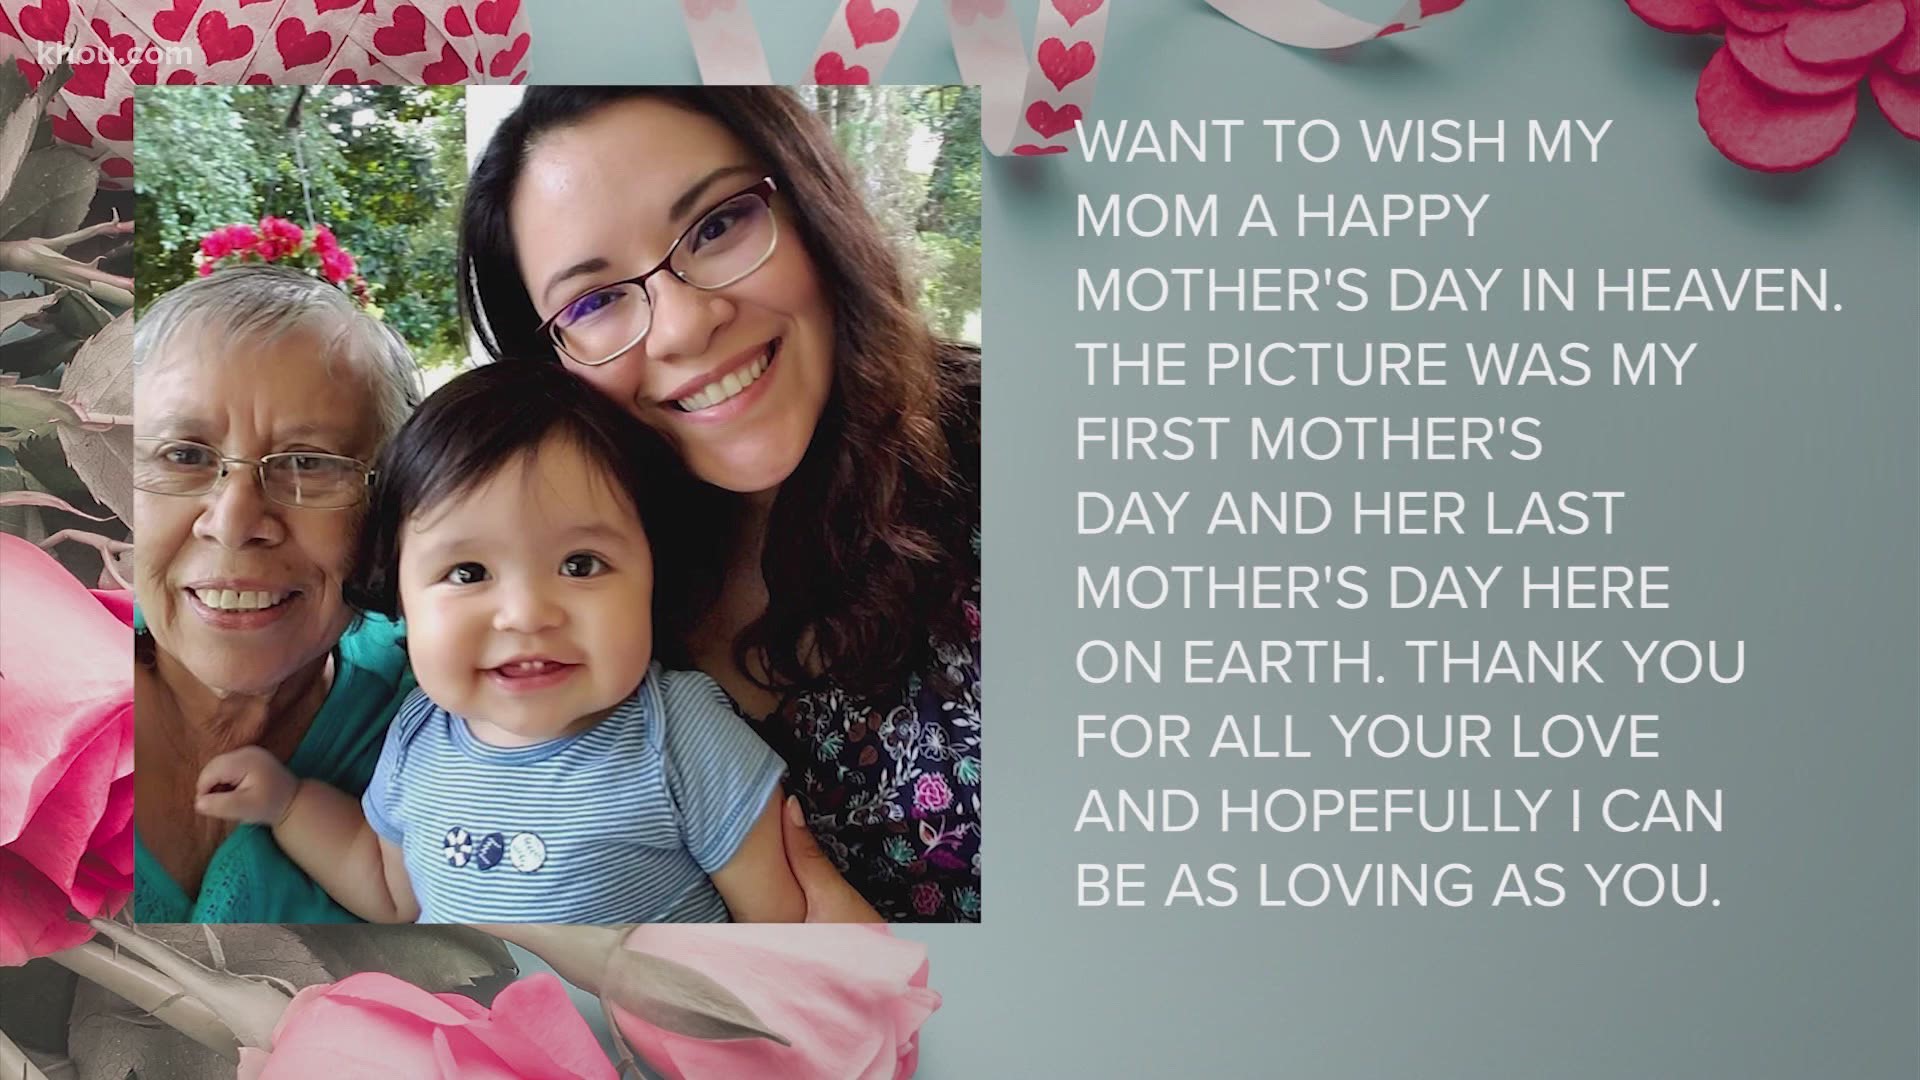 Celebrating Houston-area moms for Mother's Day 2020 | khou.com